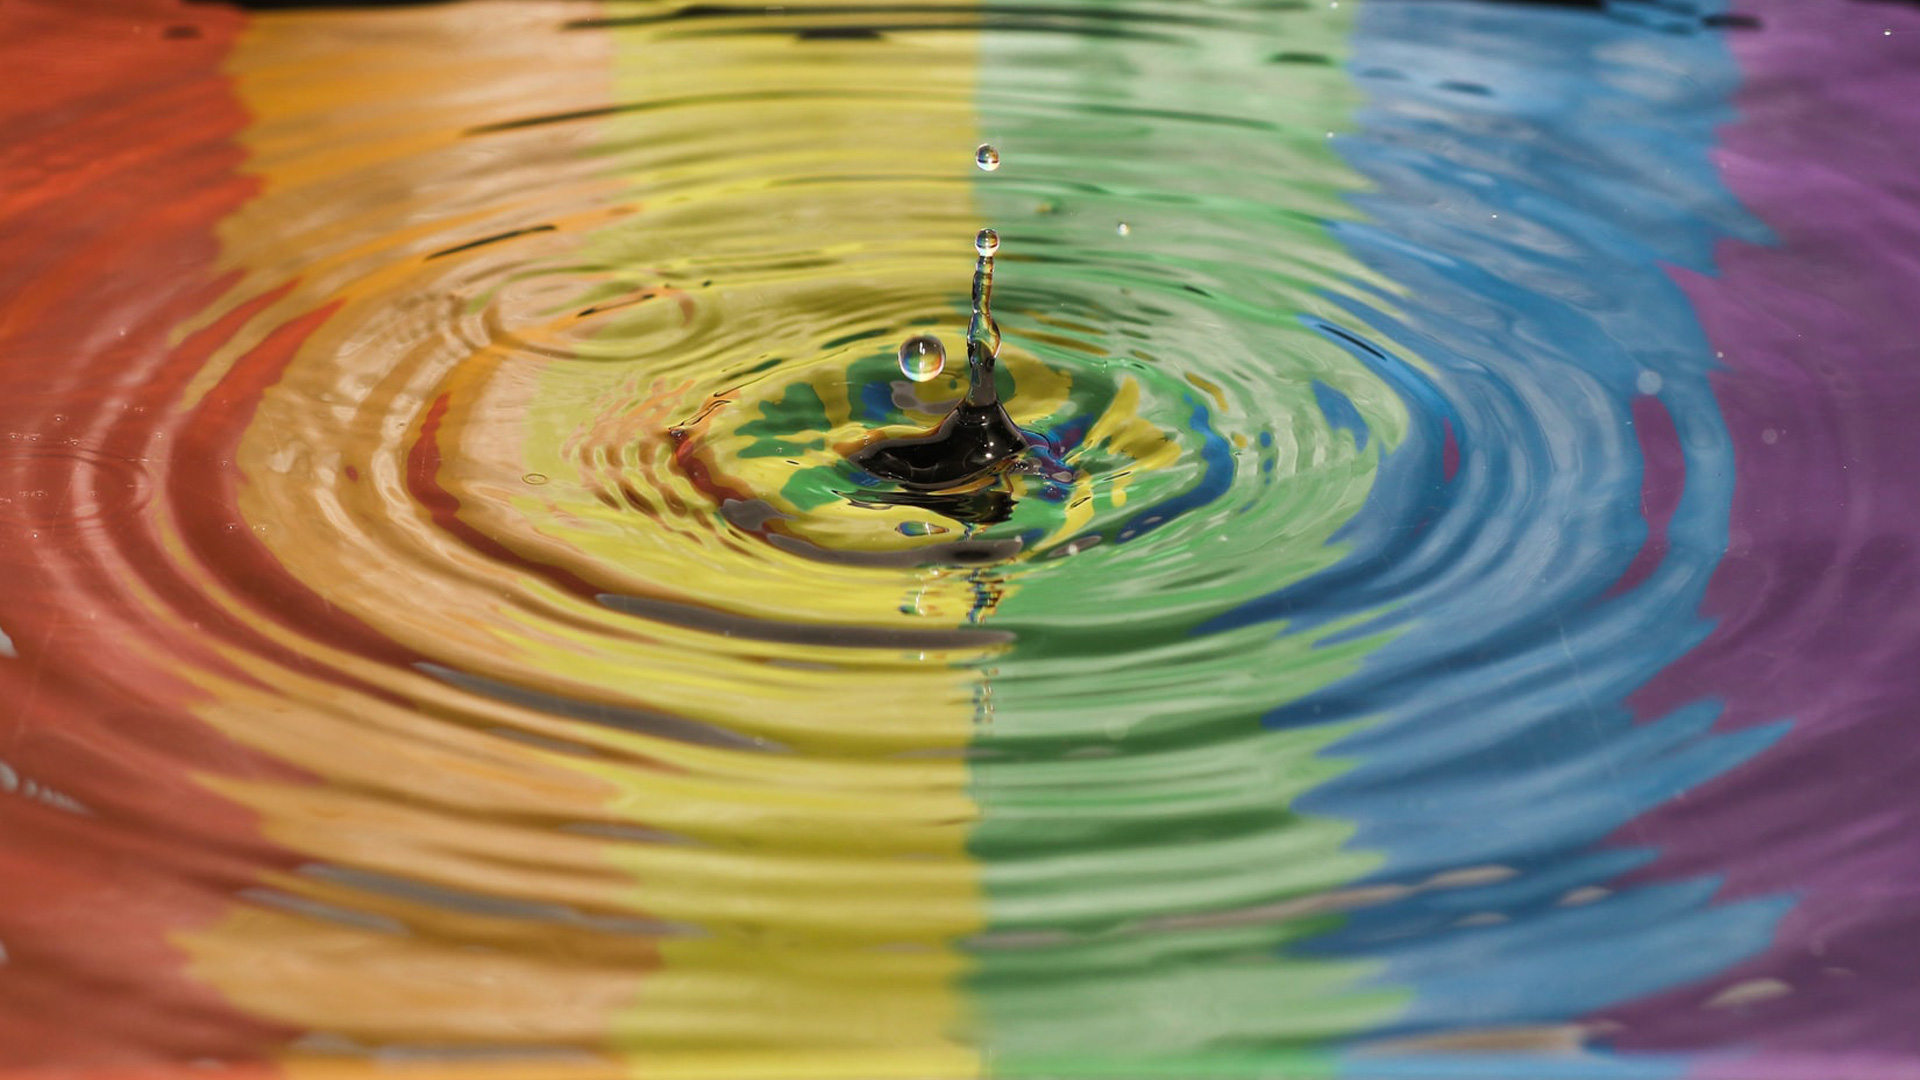 Rainbow water